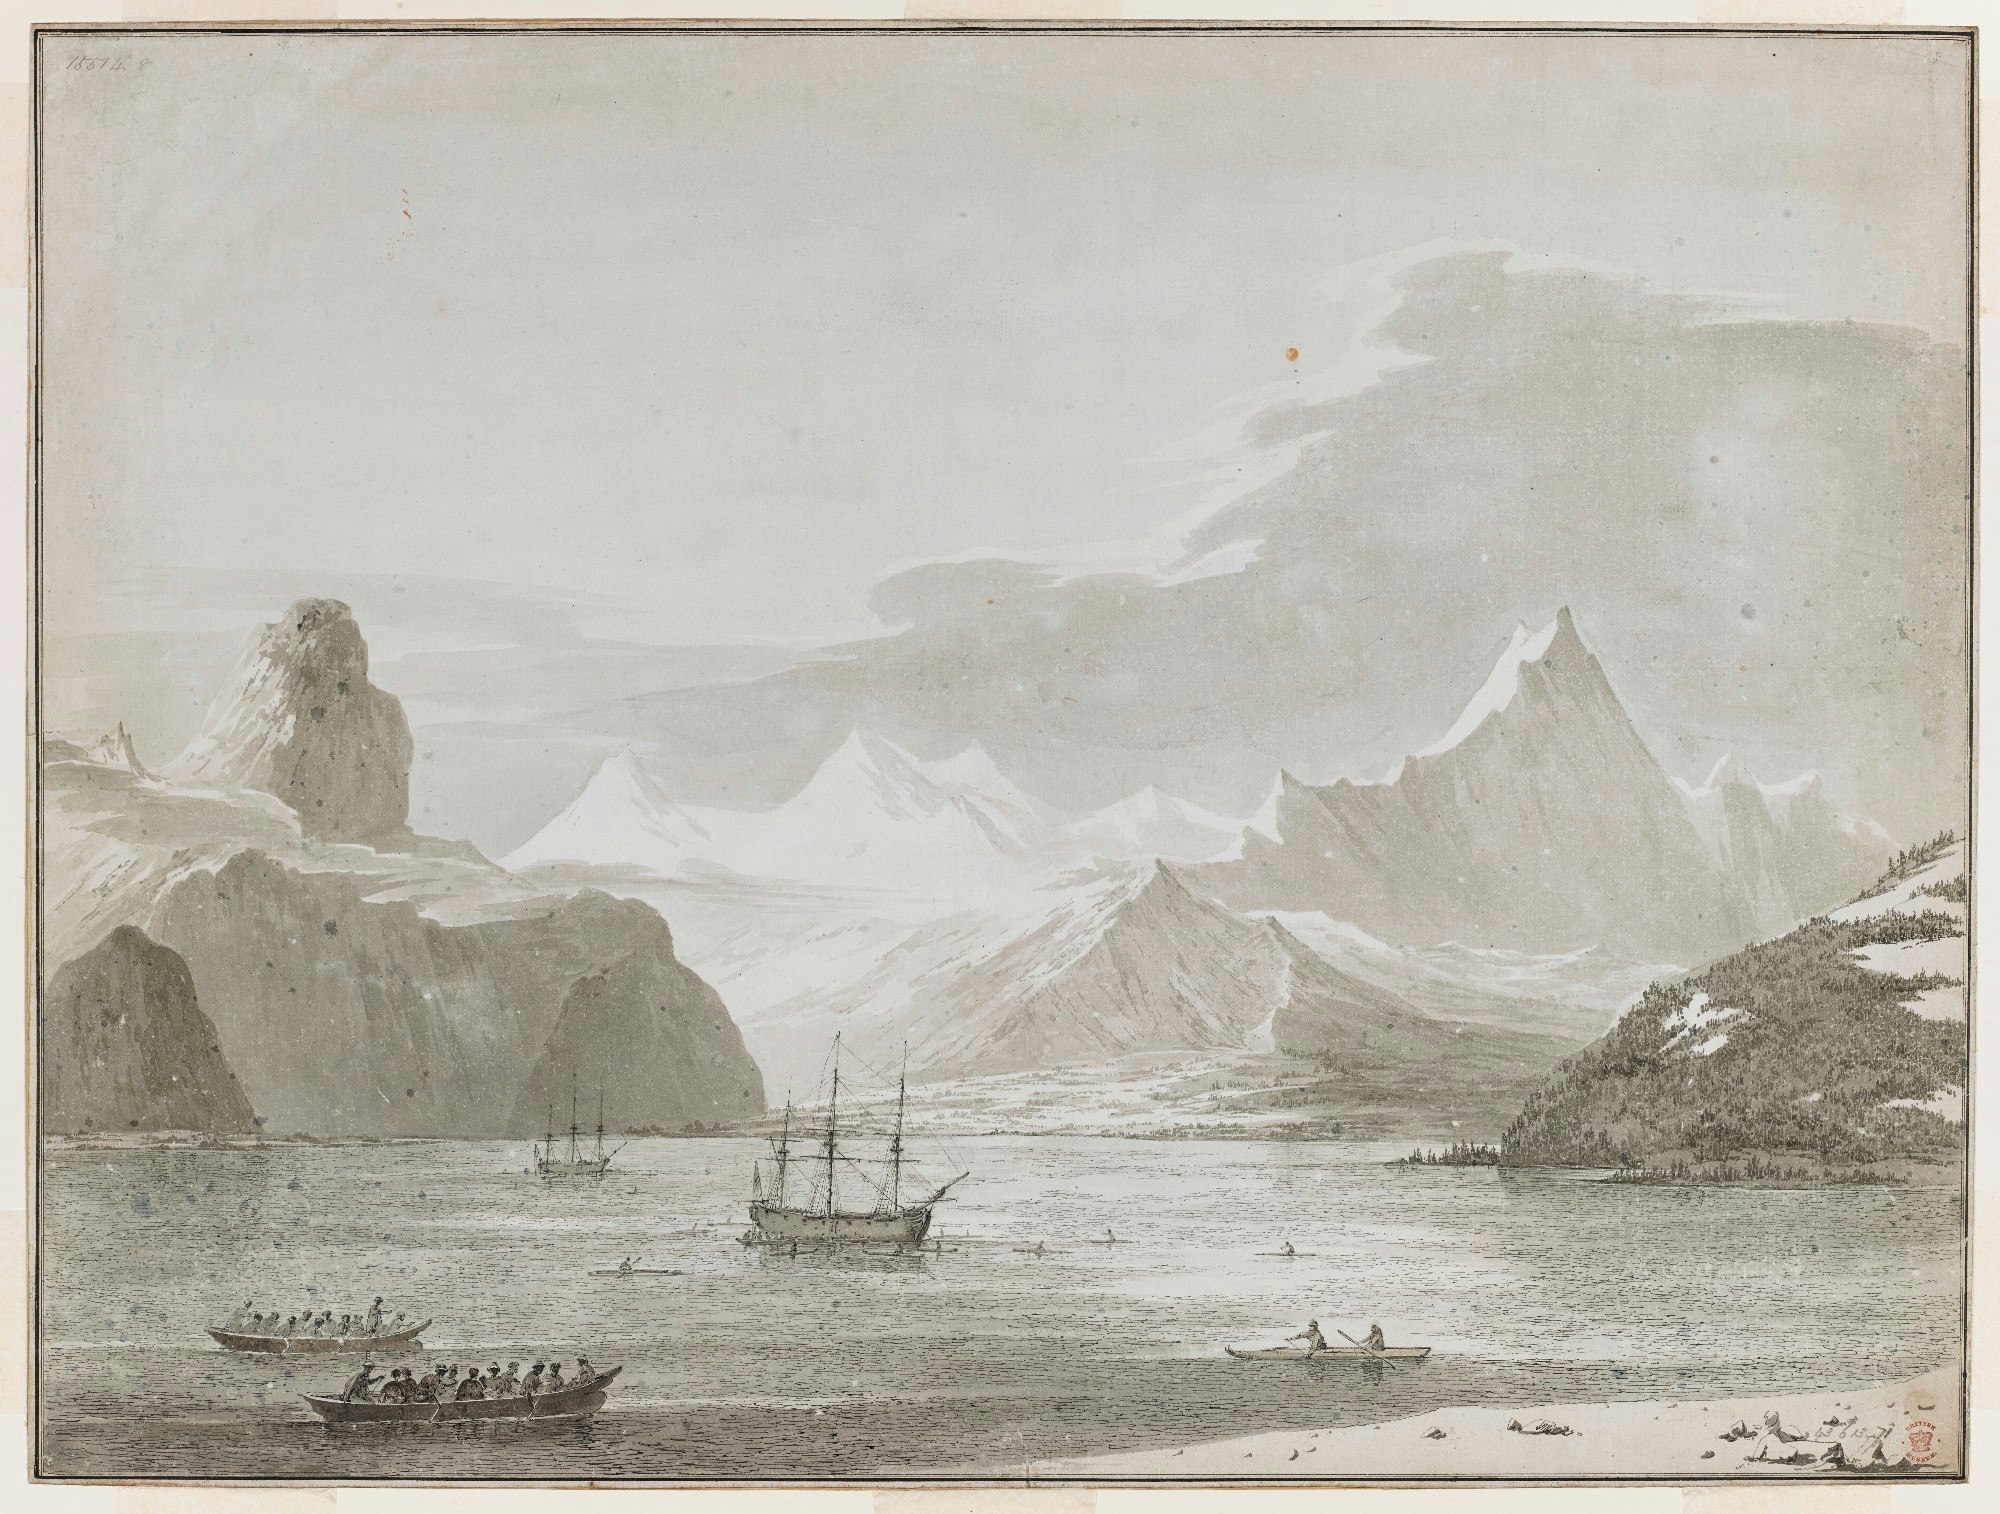 Travel News - Captain James Cook's 3rd voyage illustrations - 1777-1779